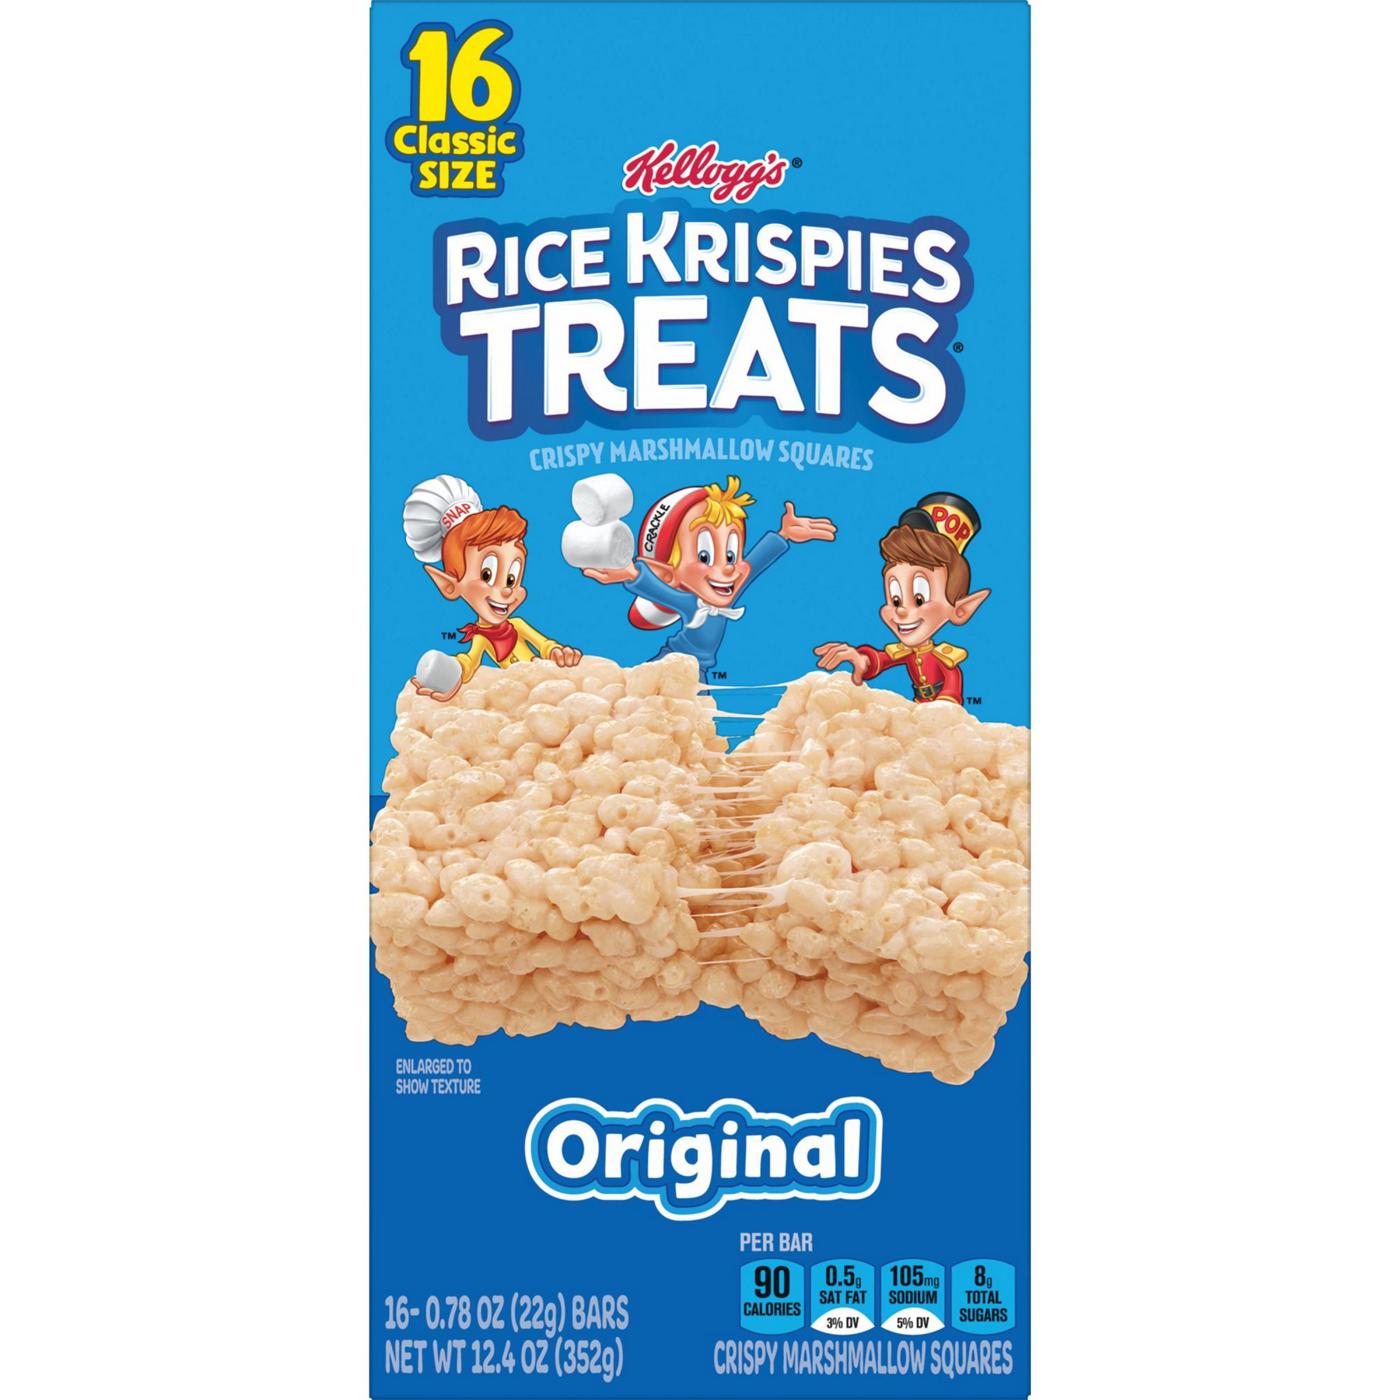 Rice Krispies Treats Original Crispy Marshmallow Squares; image 1 of 6